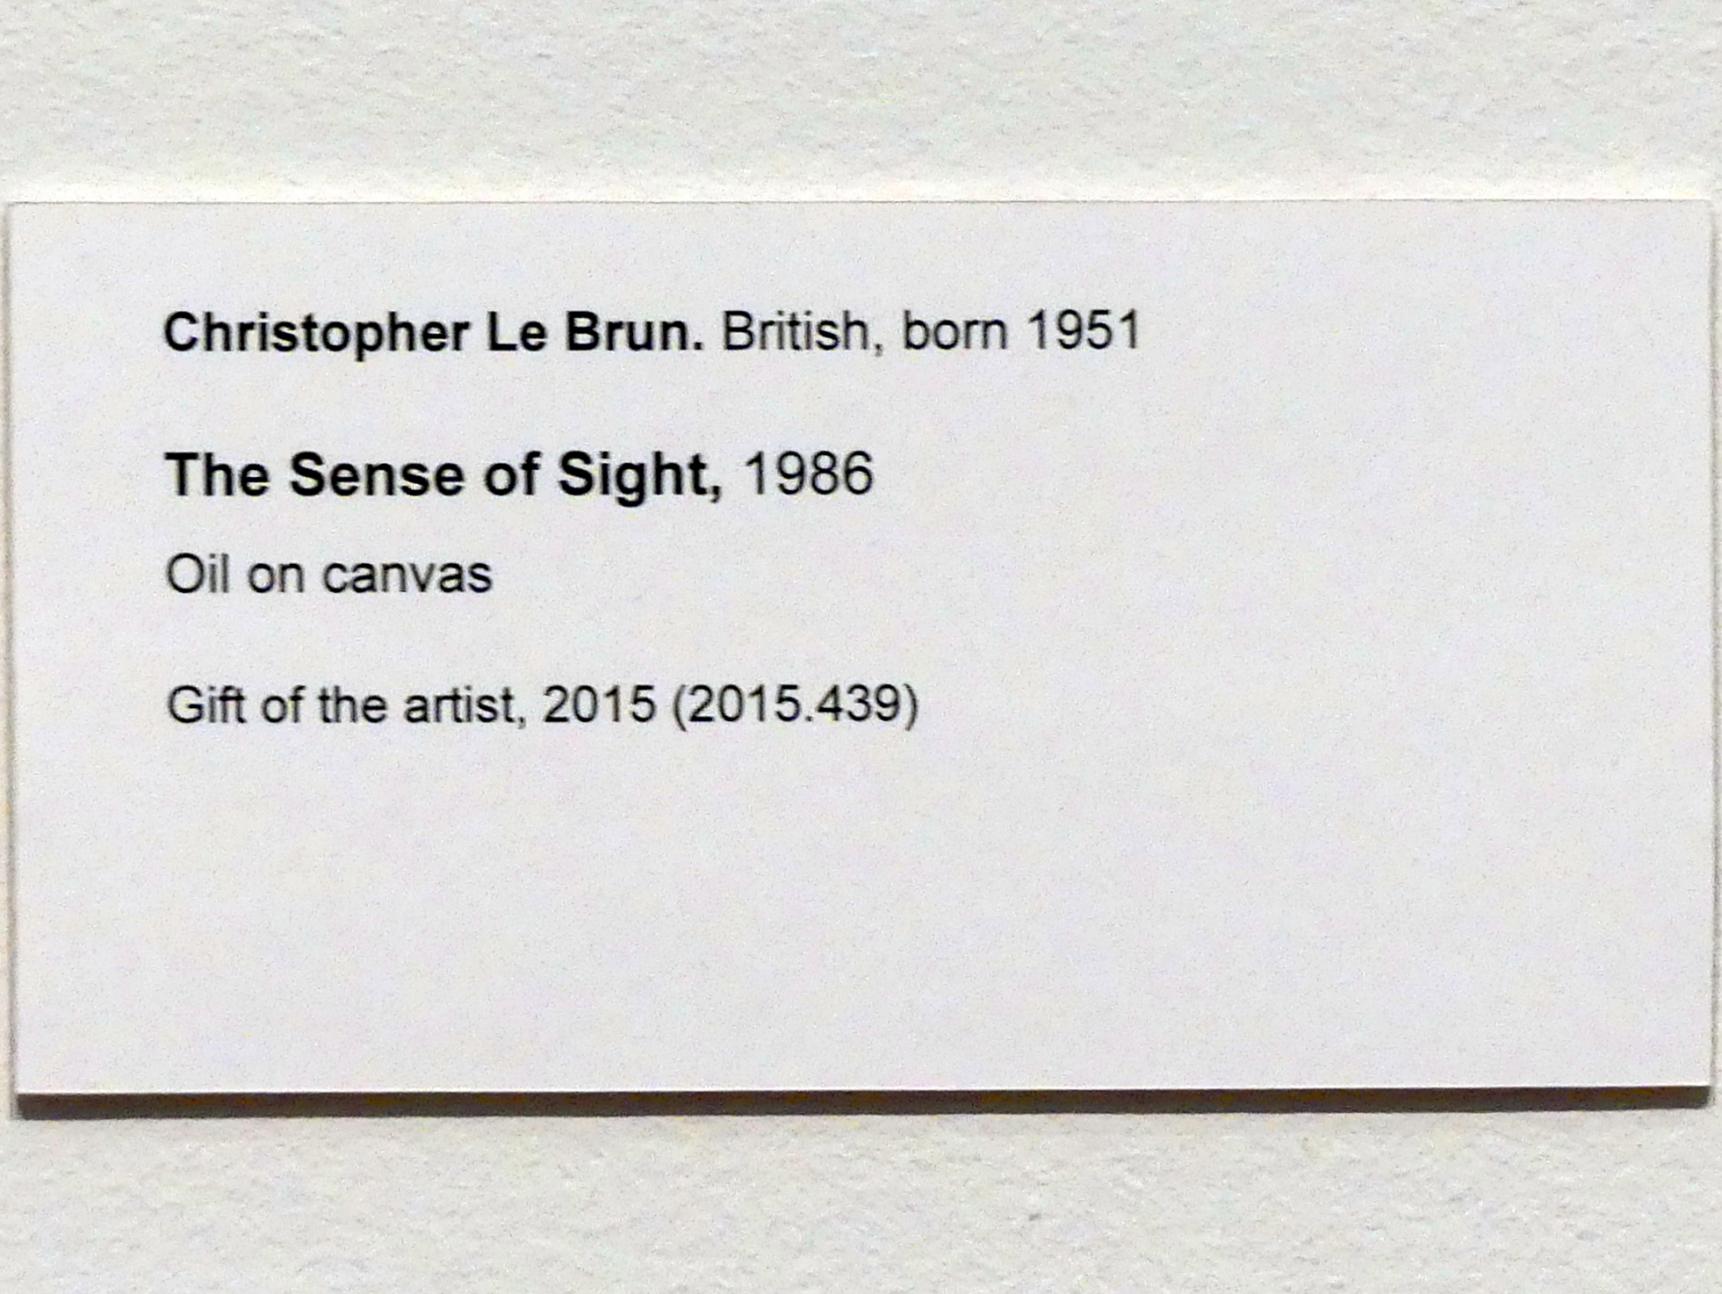 Christopher Le Brun (1986), The Sense of Sight - Der Sehsinn, New York, Metropolitan Museum of Art (Met), Saal 915, 1986, Bild 2/2